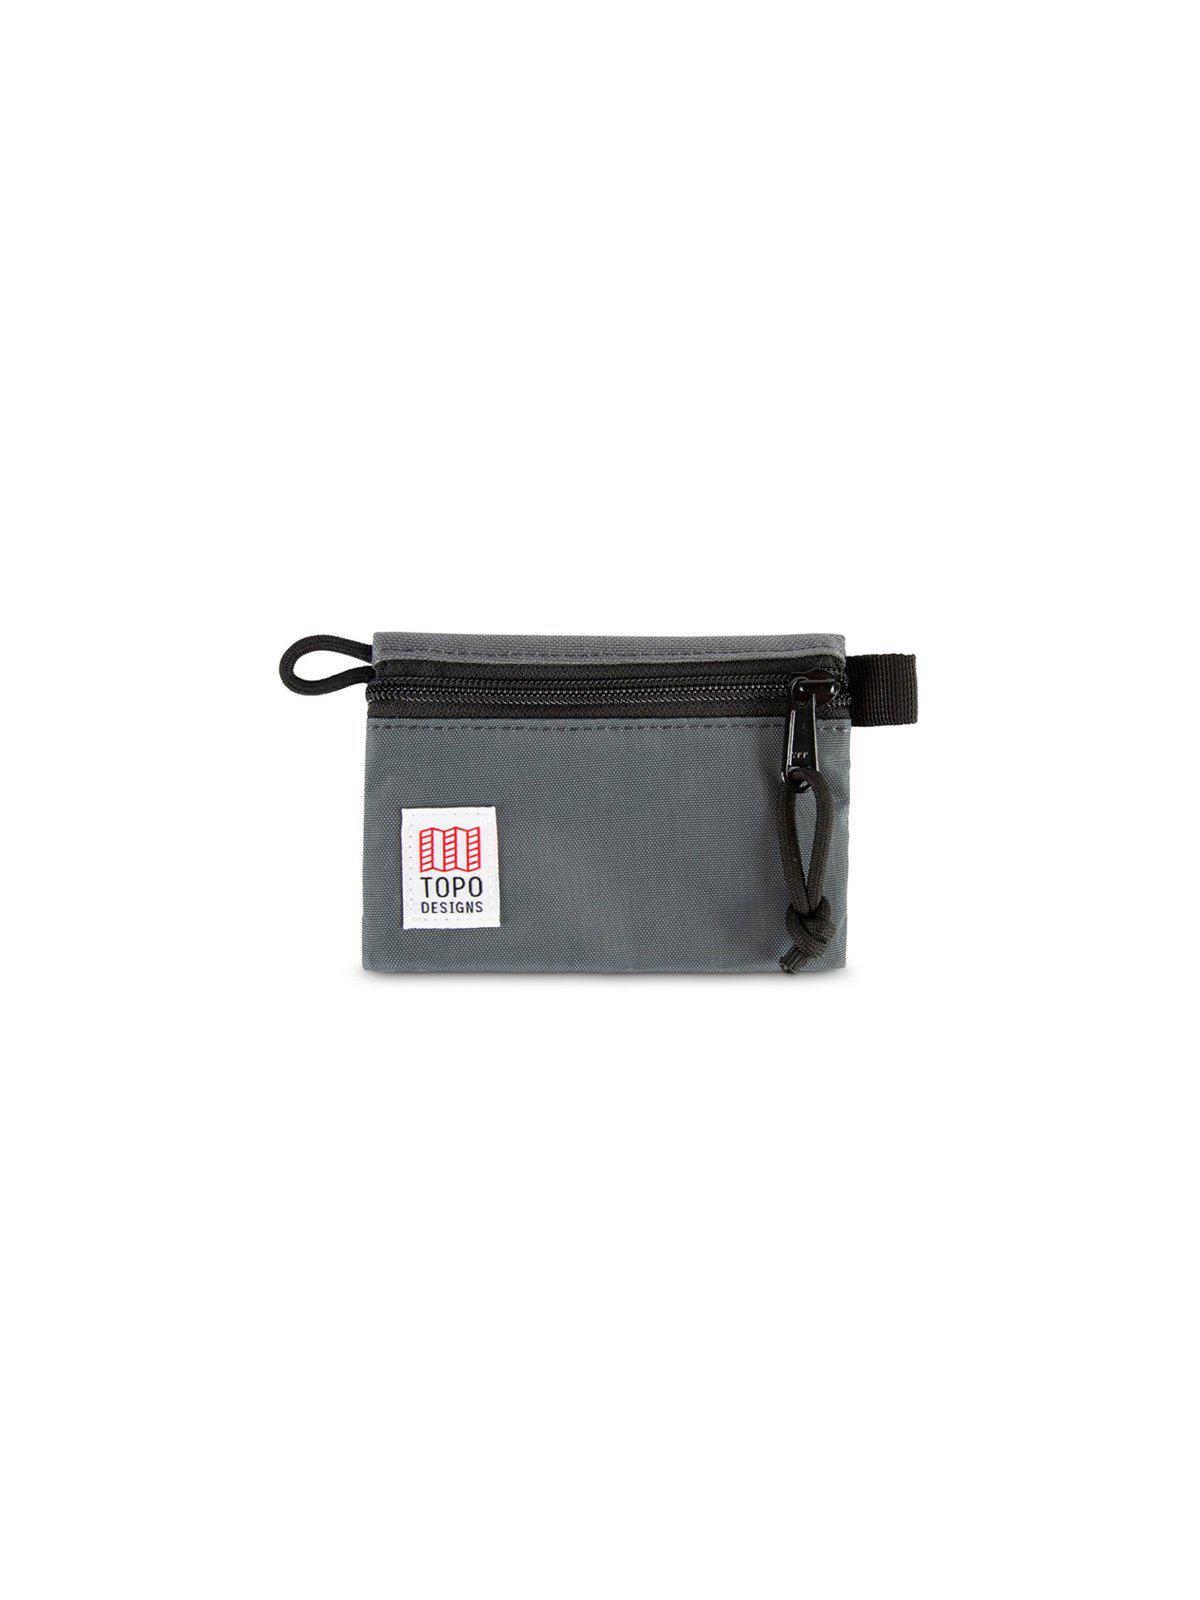 Topo Designs Accessory Bags Charcoal